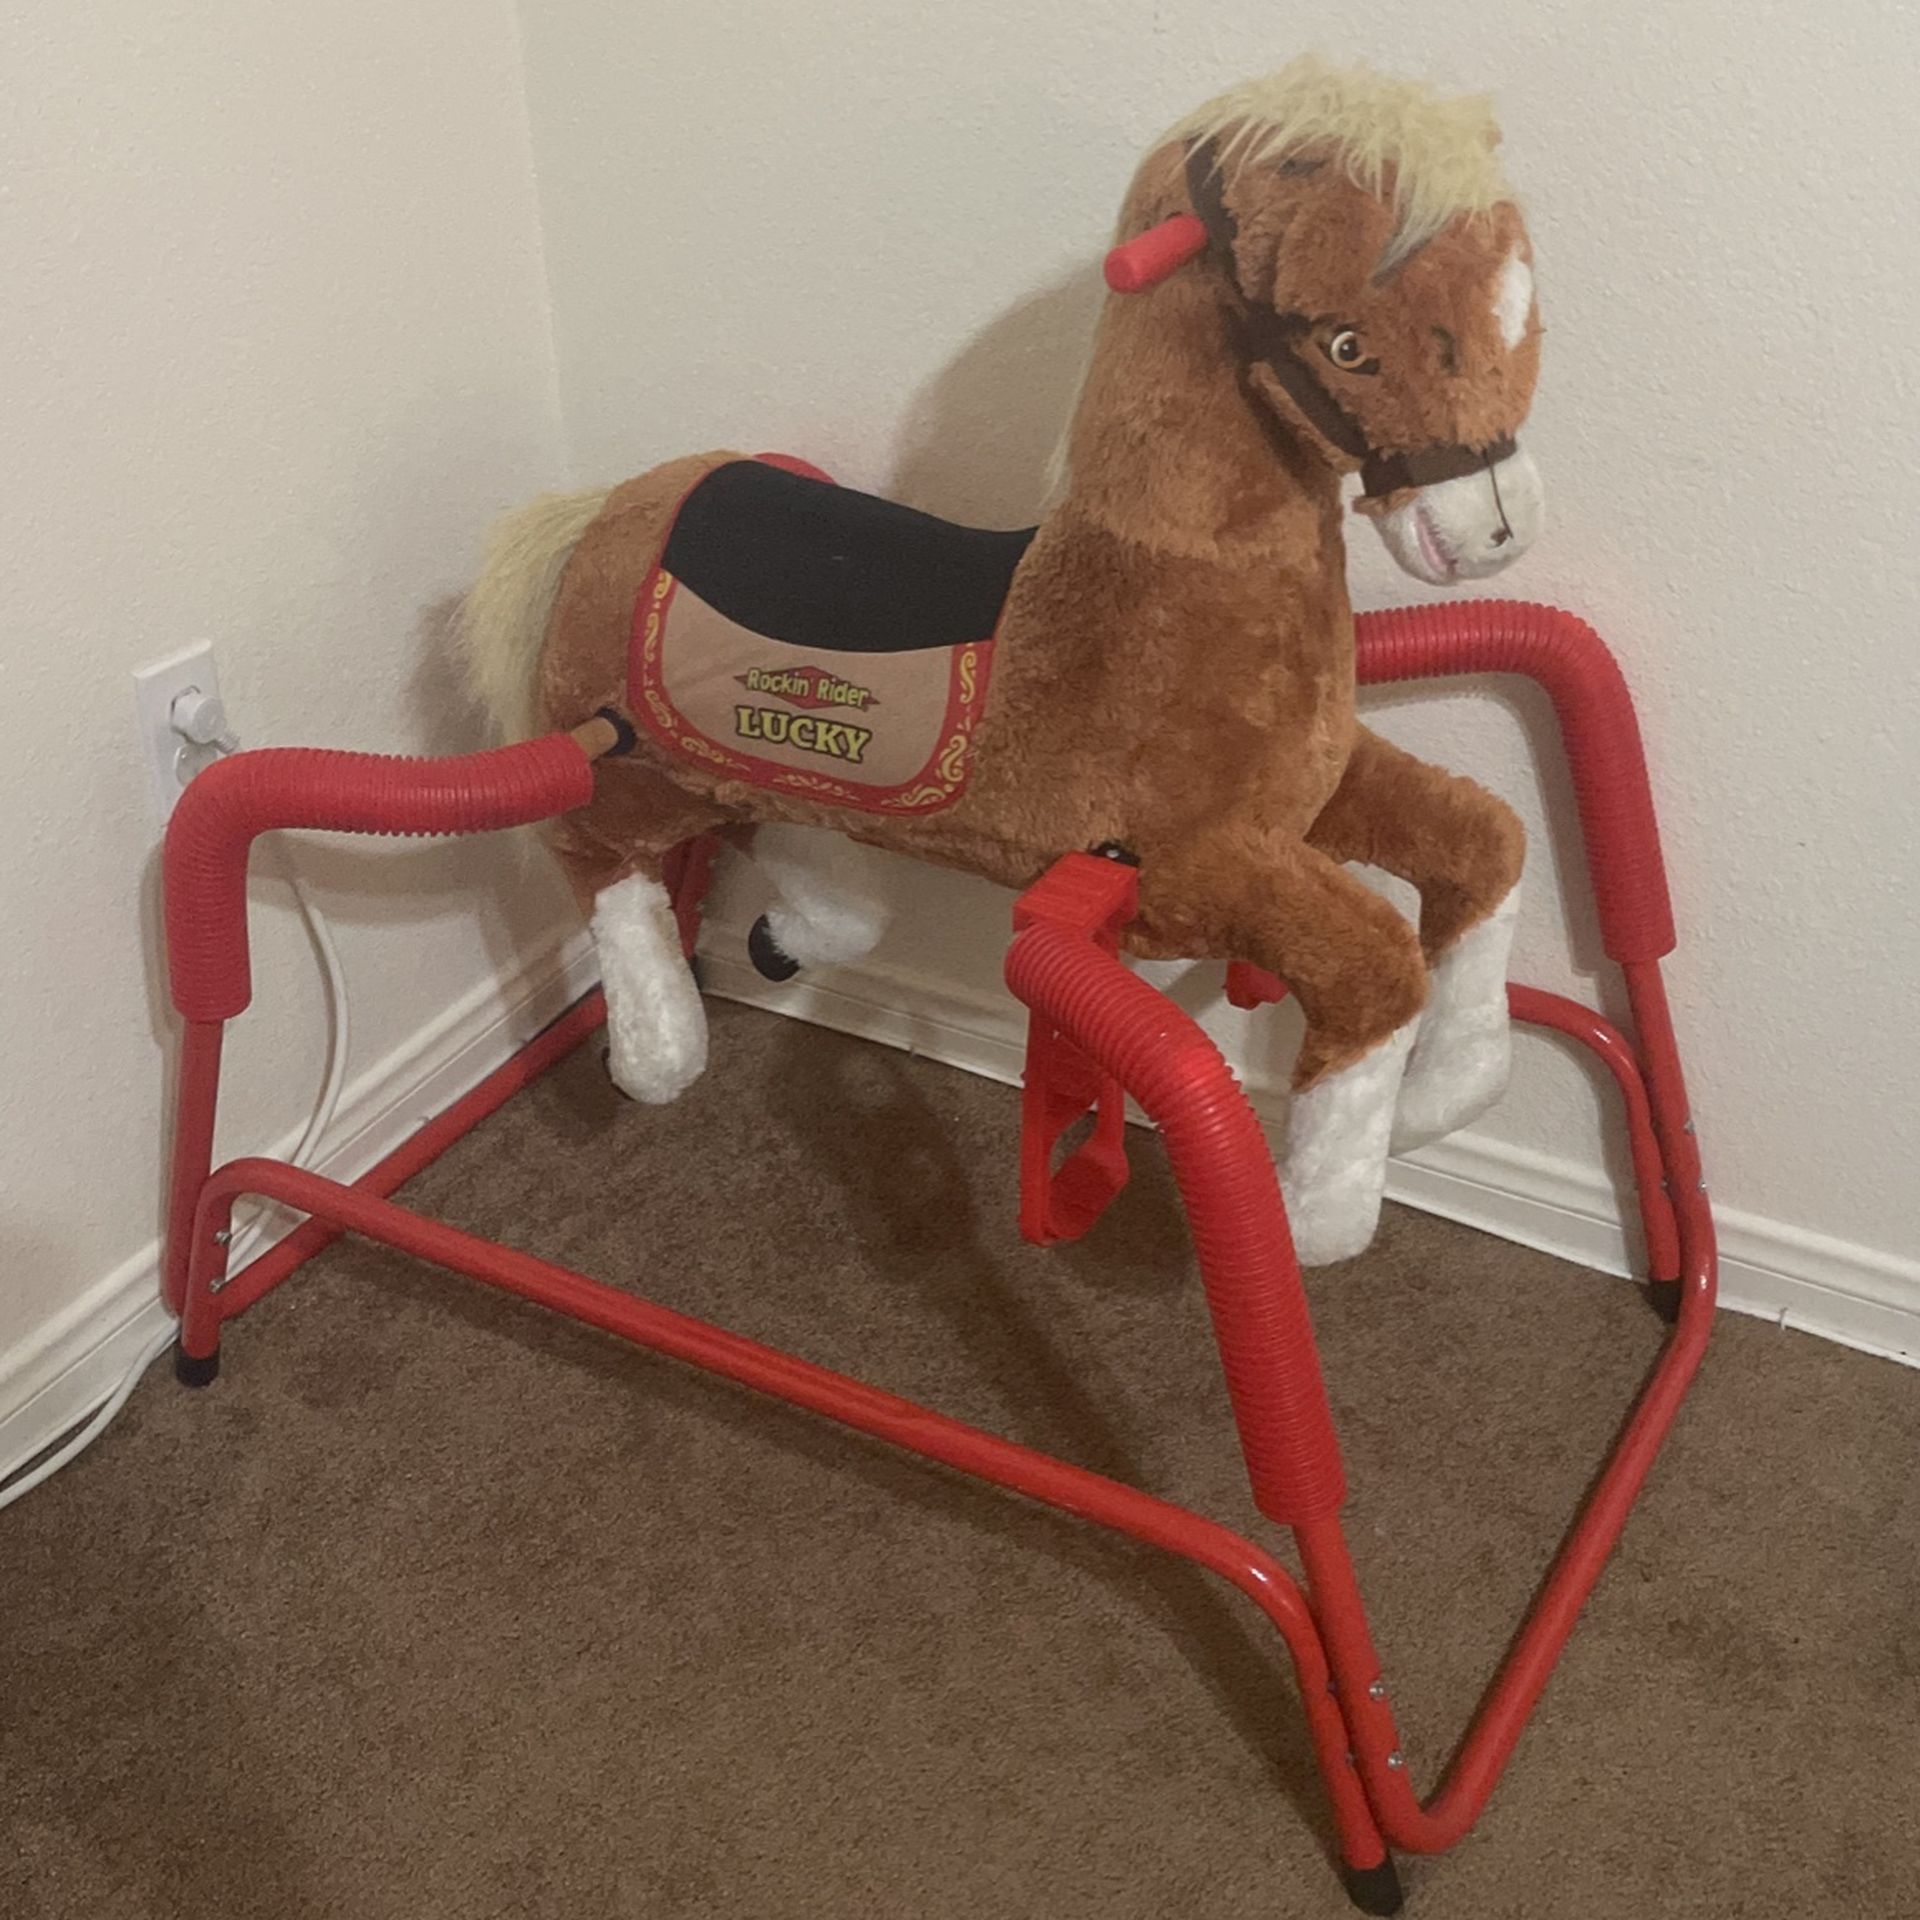 Play Horse 